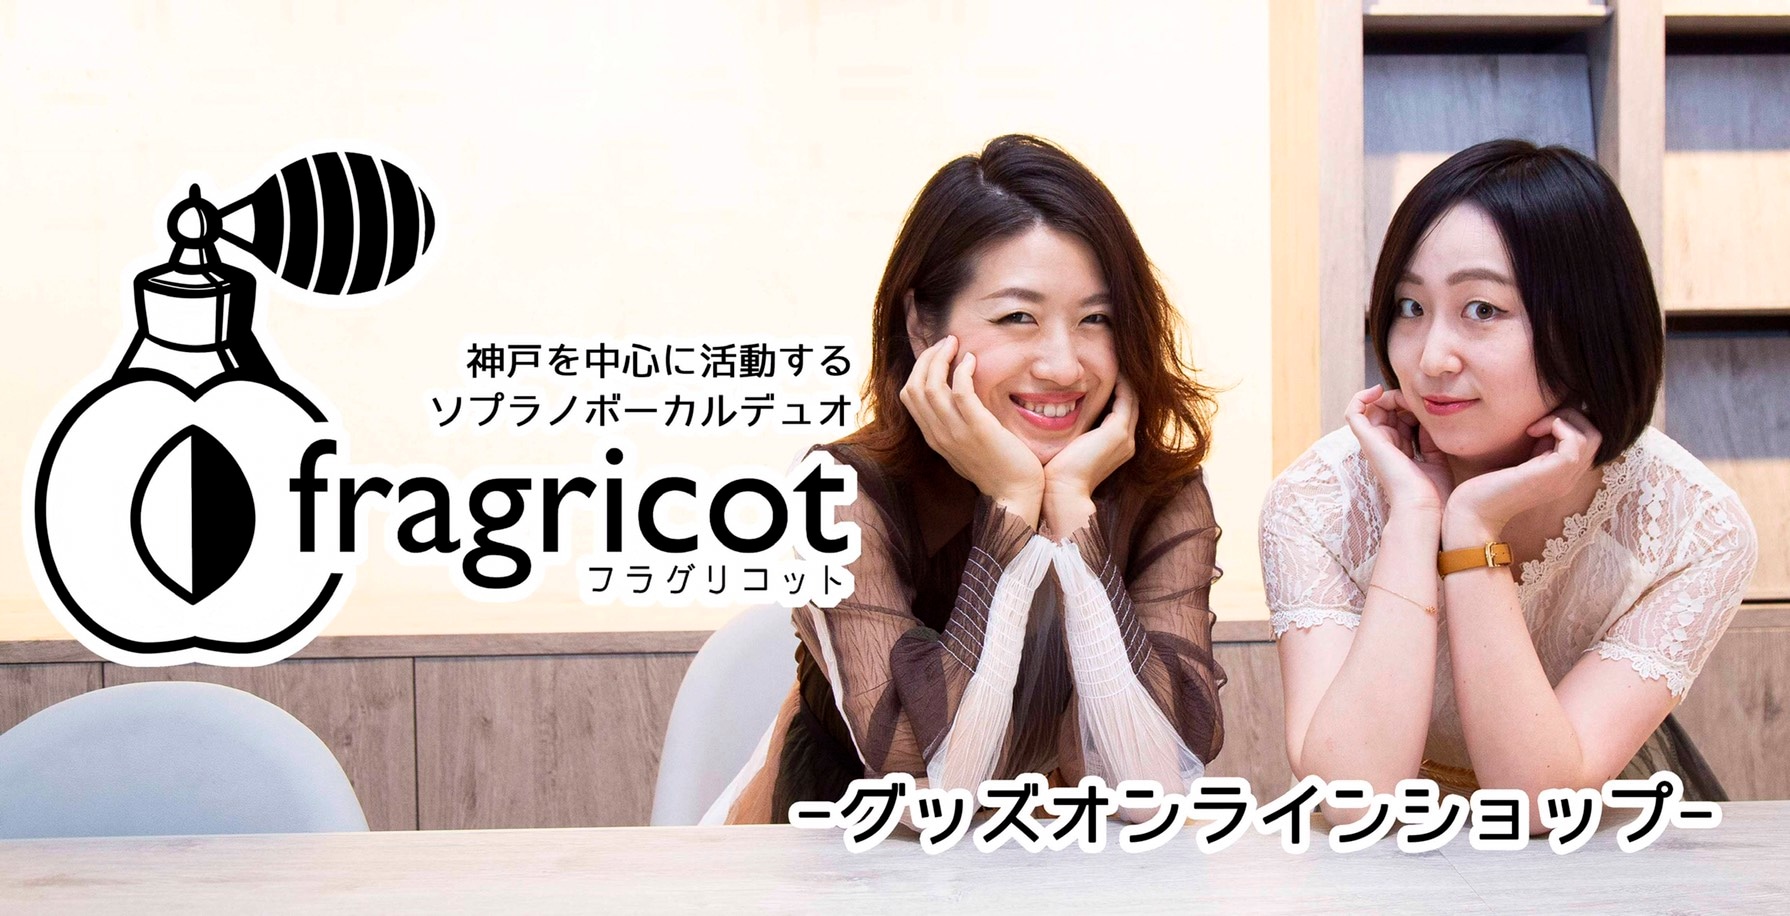 fragricot公式通販サイト